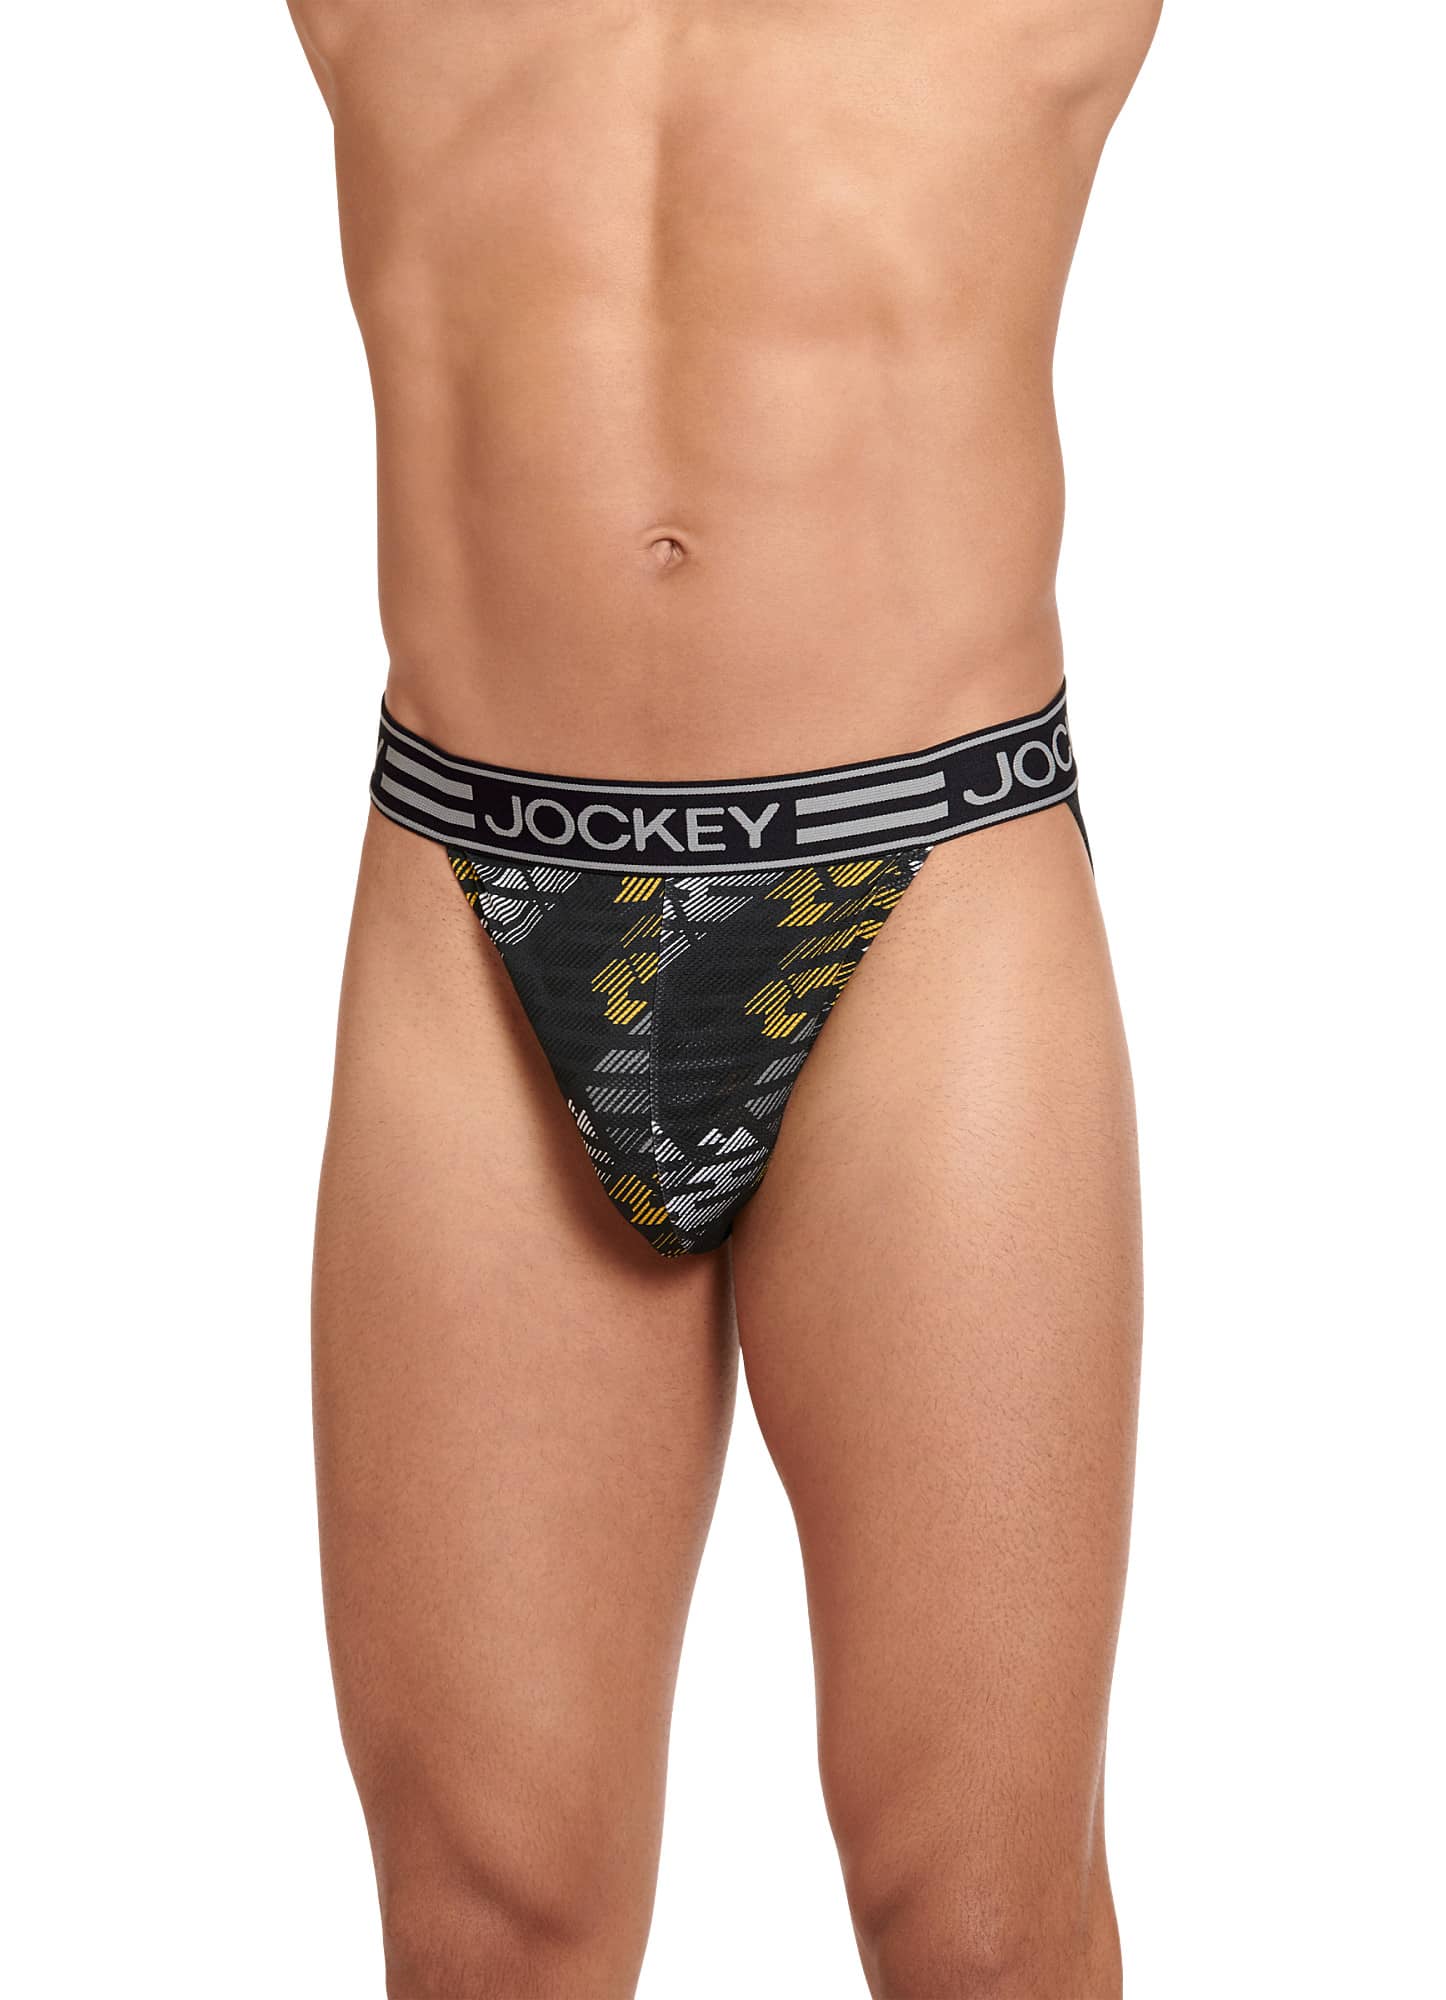 Jockey Men's Underwear Sport Cooling Mesh Performance String Bikini 